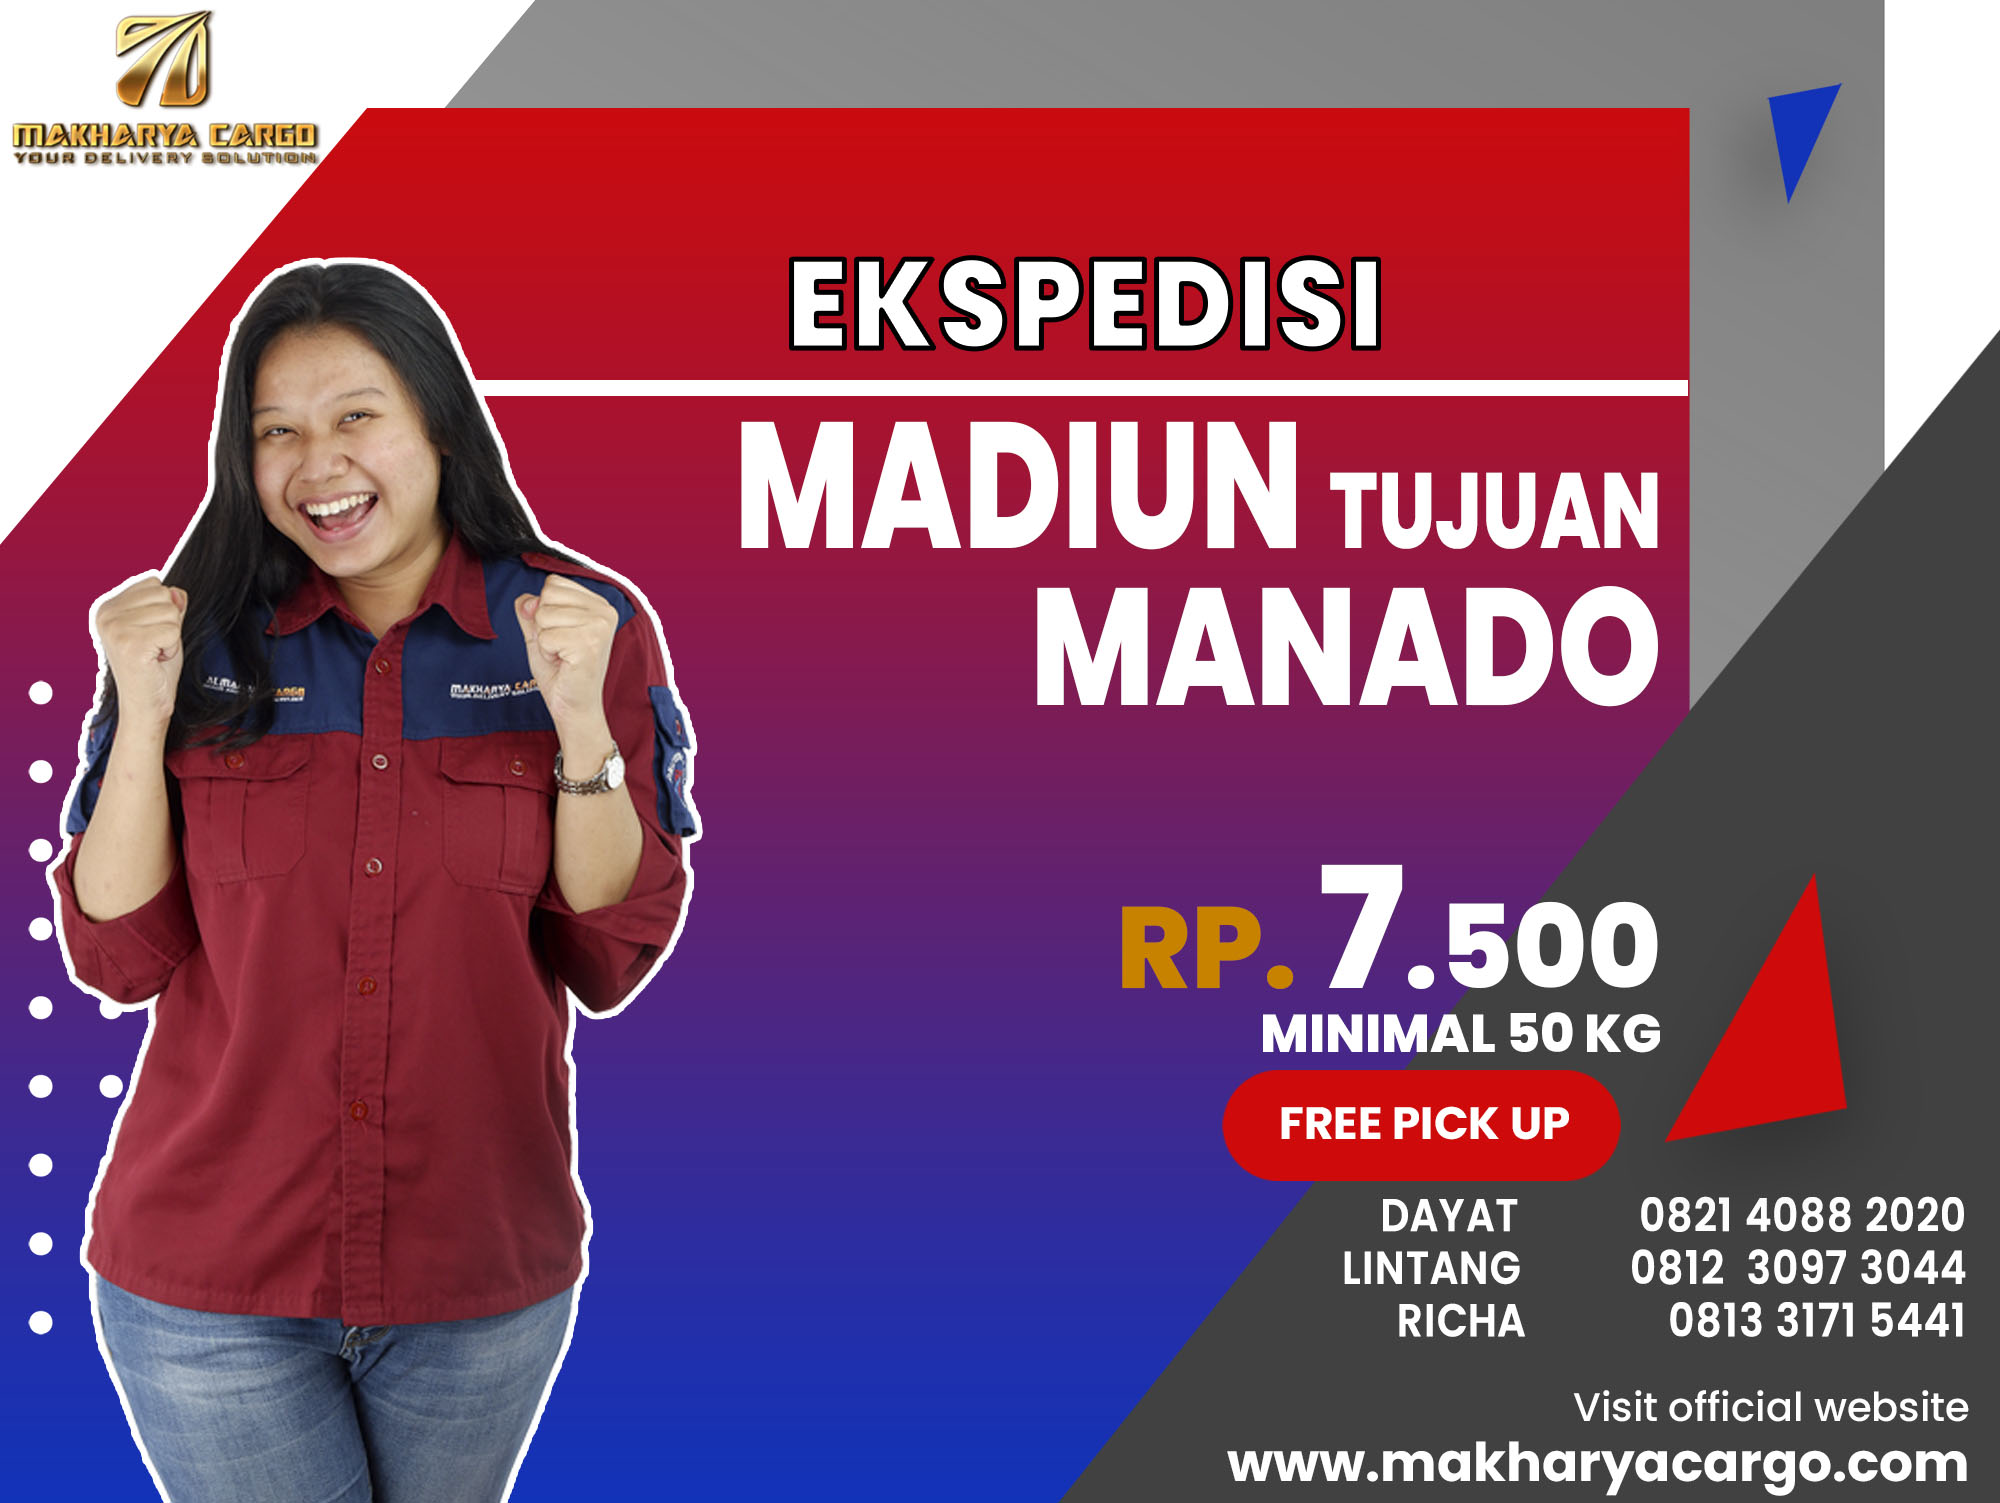 Ekspedisi Madiun Manado